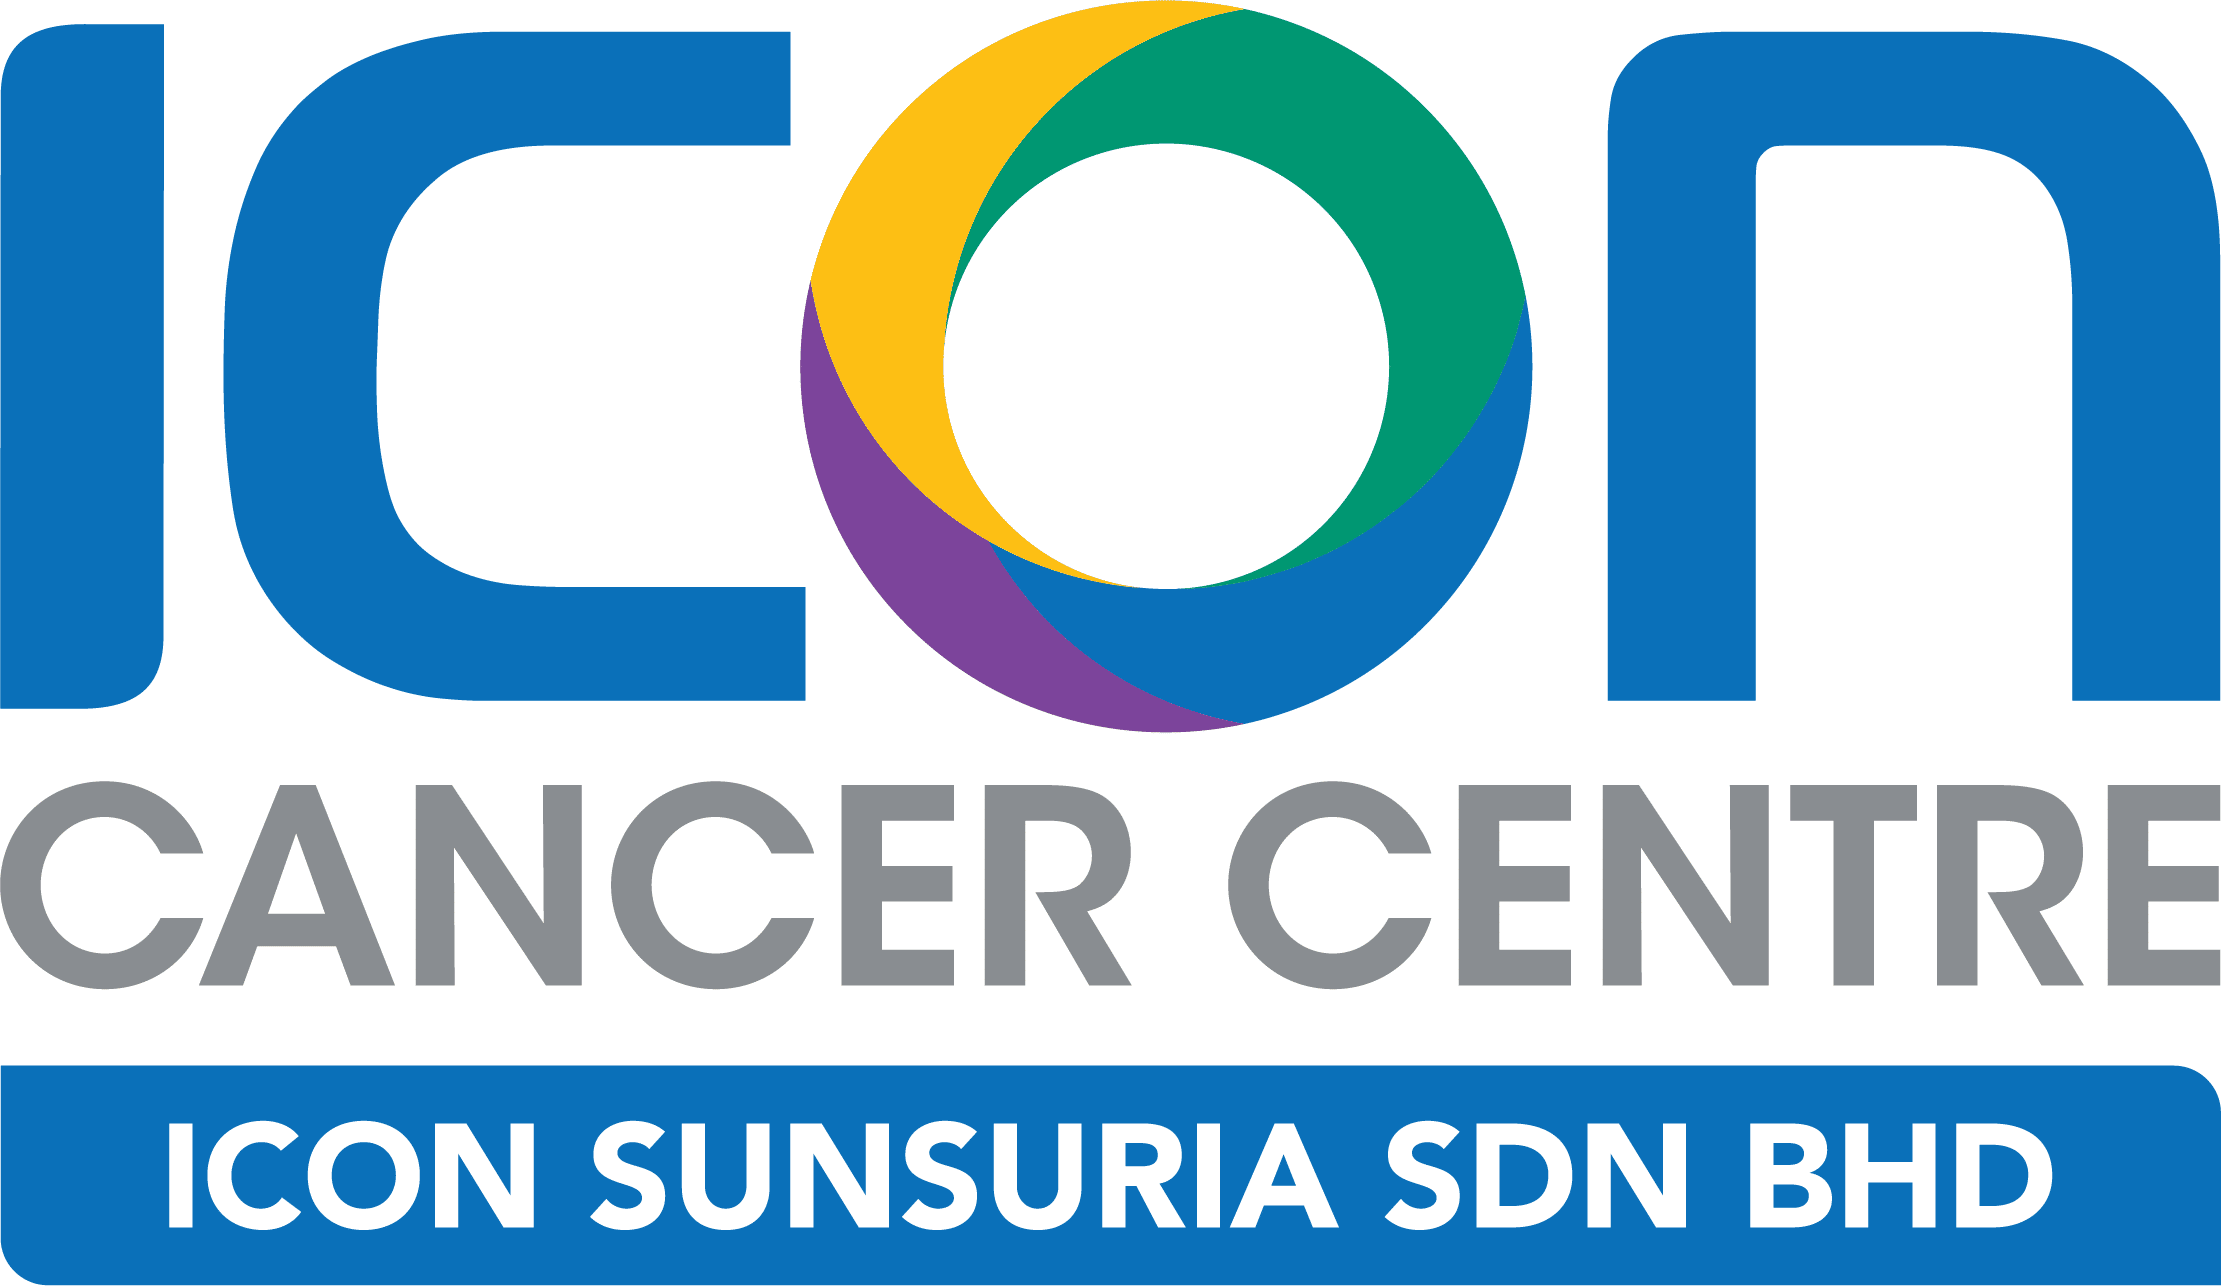 Icon Cancer Centre Sunsuria logo